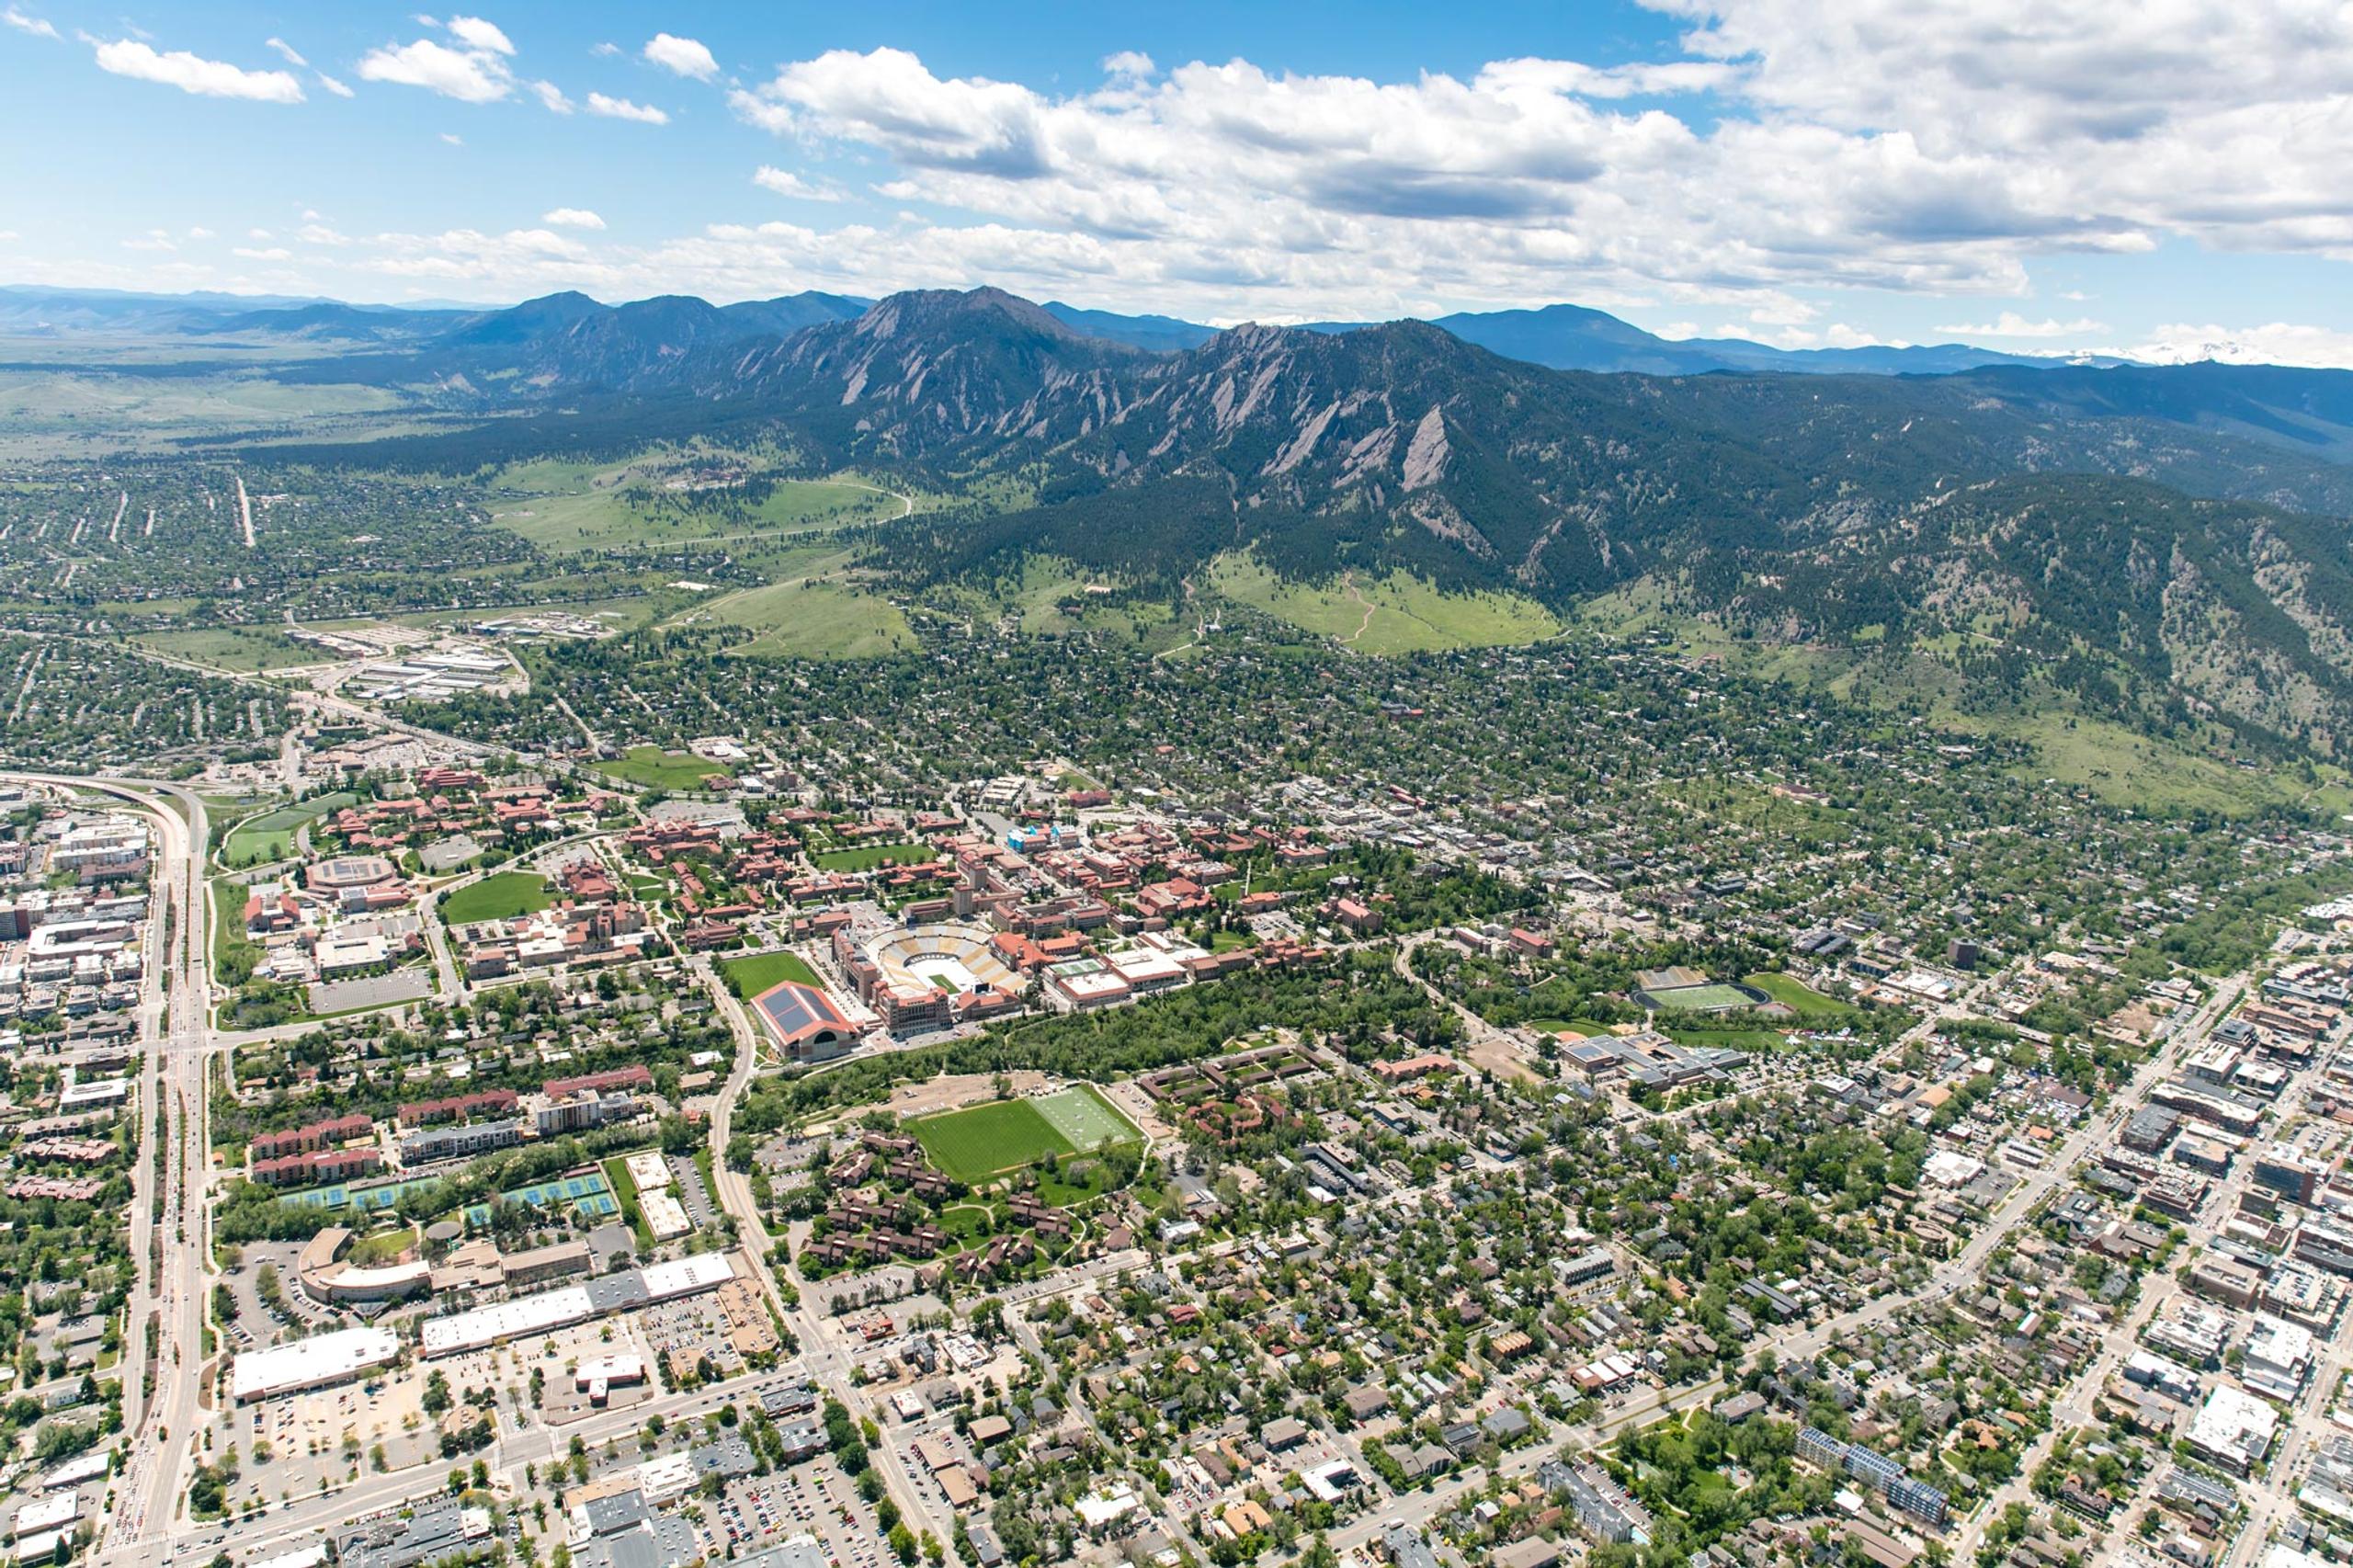 Aerial view of Boulder, Colorado